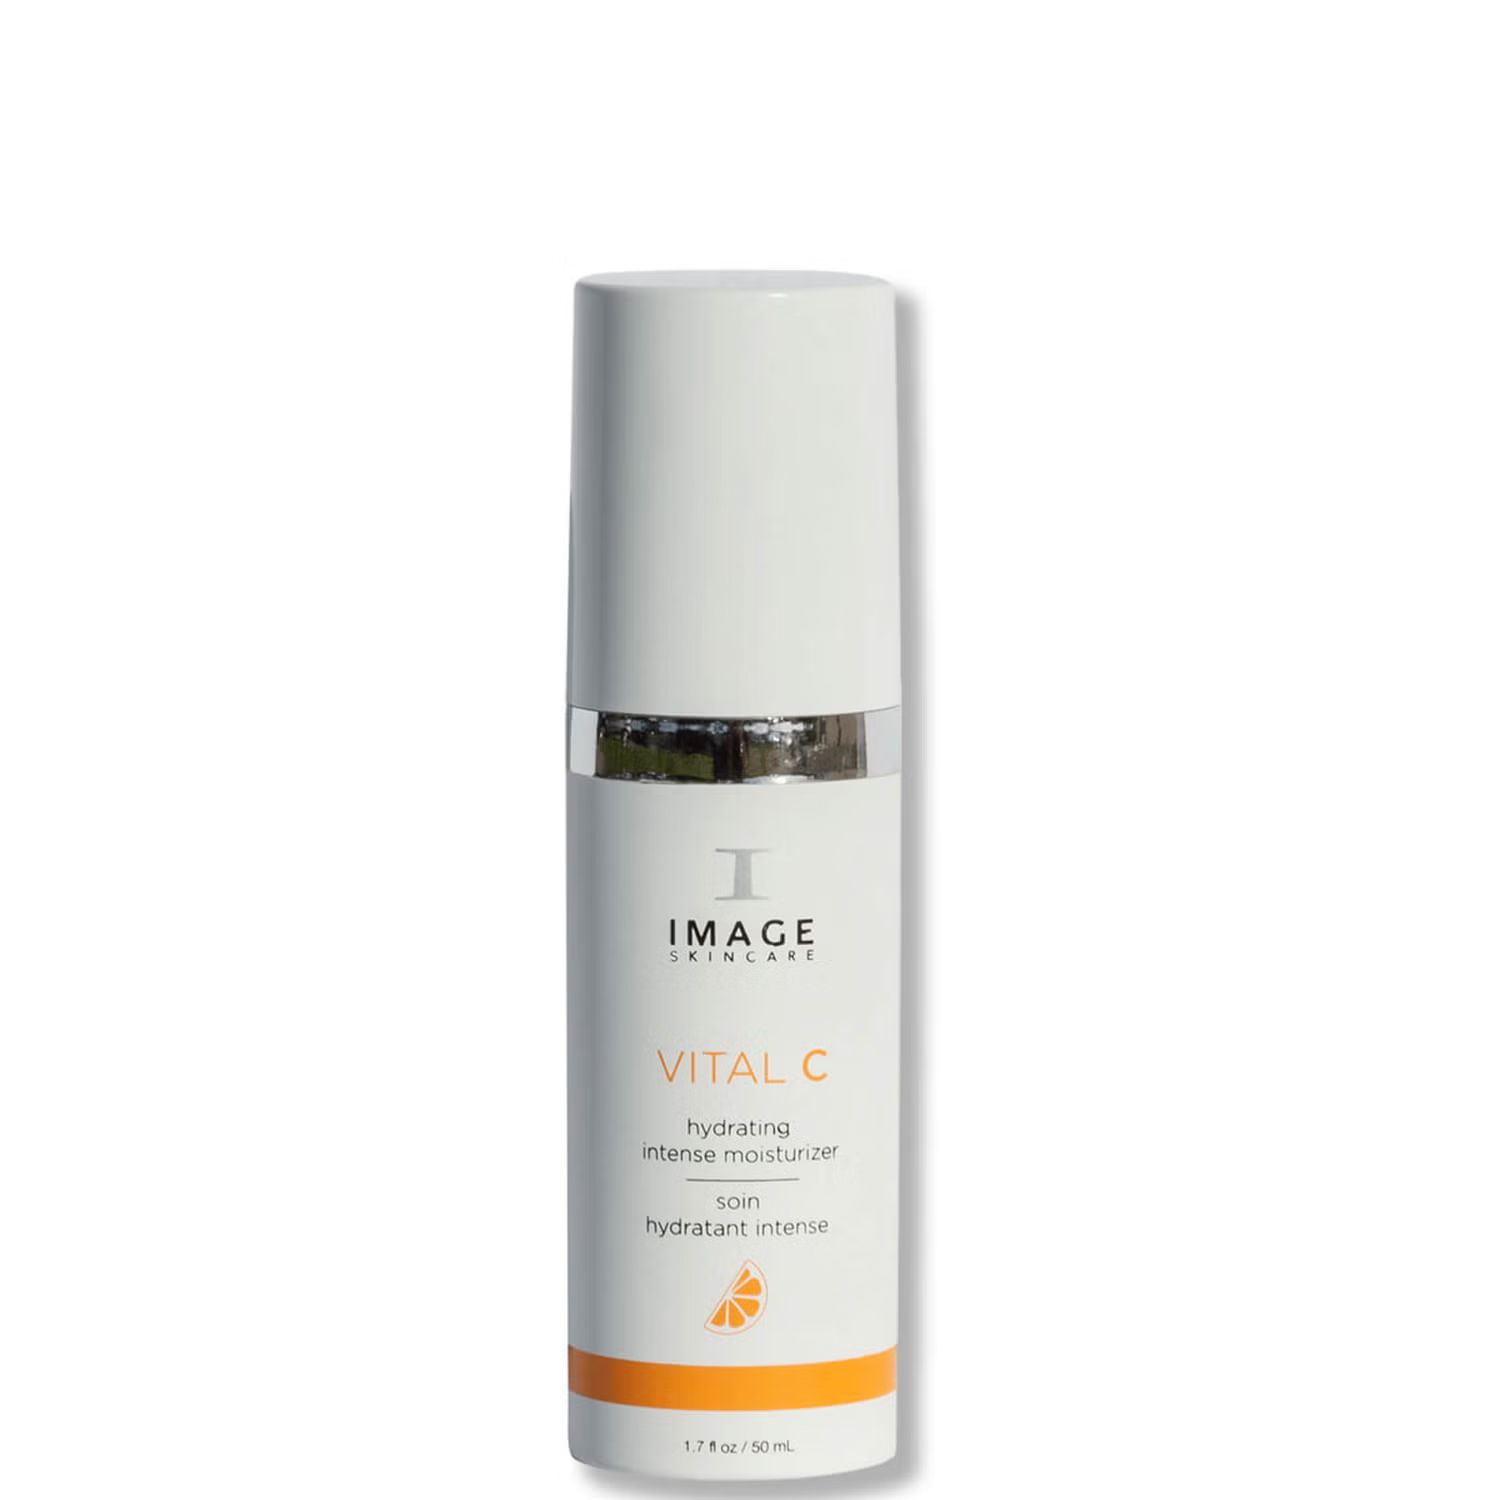 IMAGE Skincare VITAL C Hydrating Intense Moisturizer 1.7 fl. oz | Skinstore